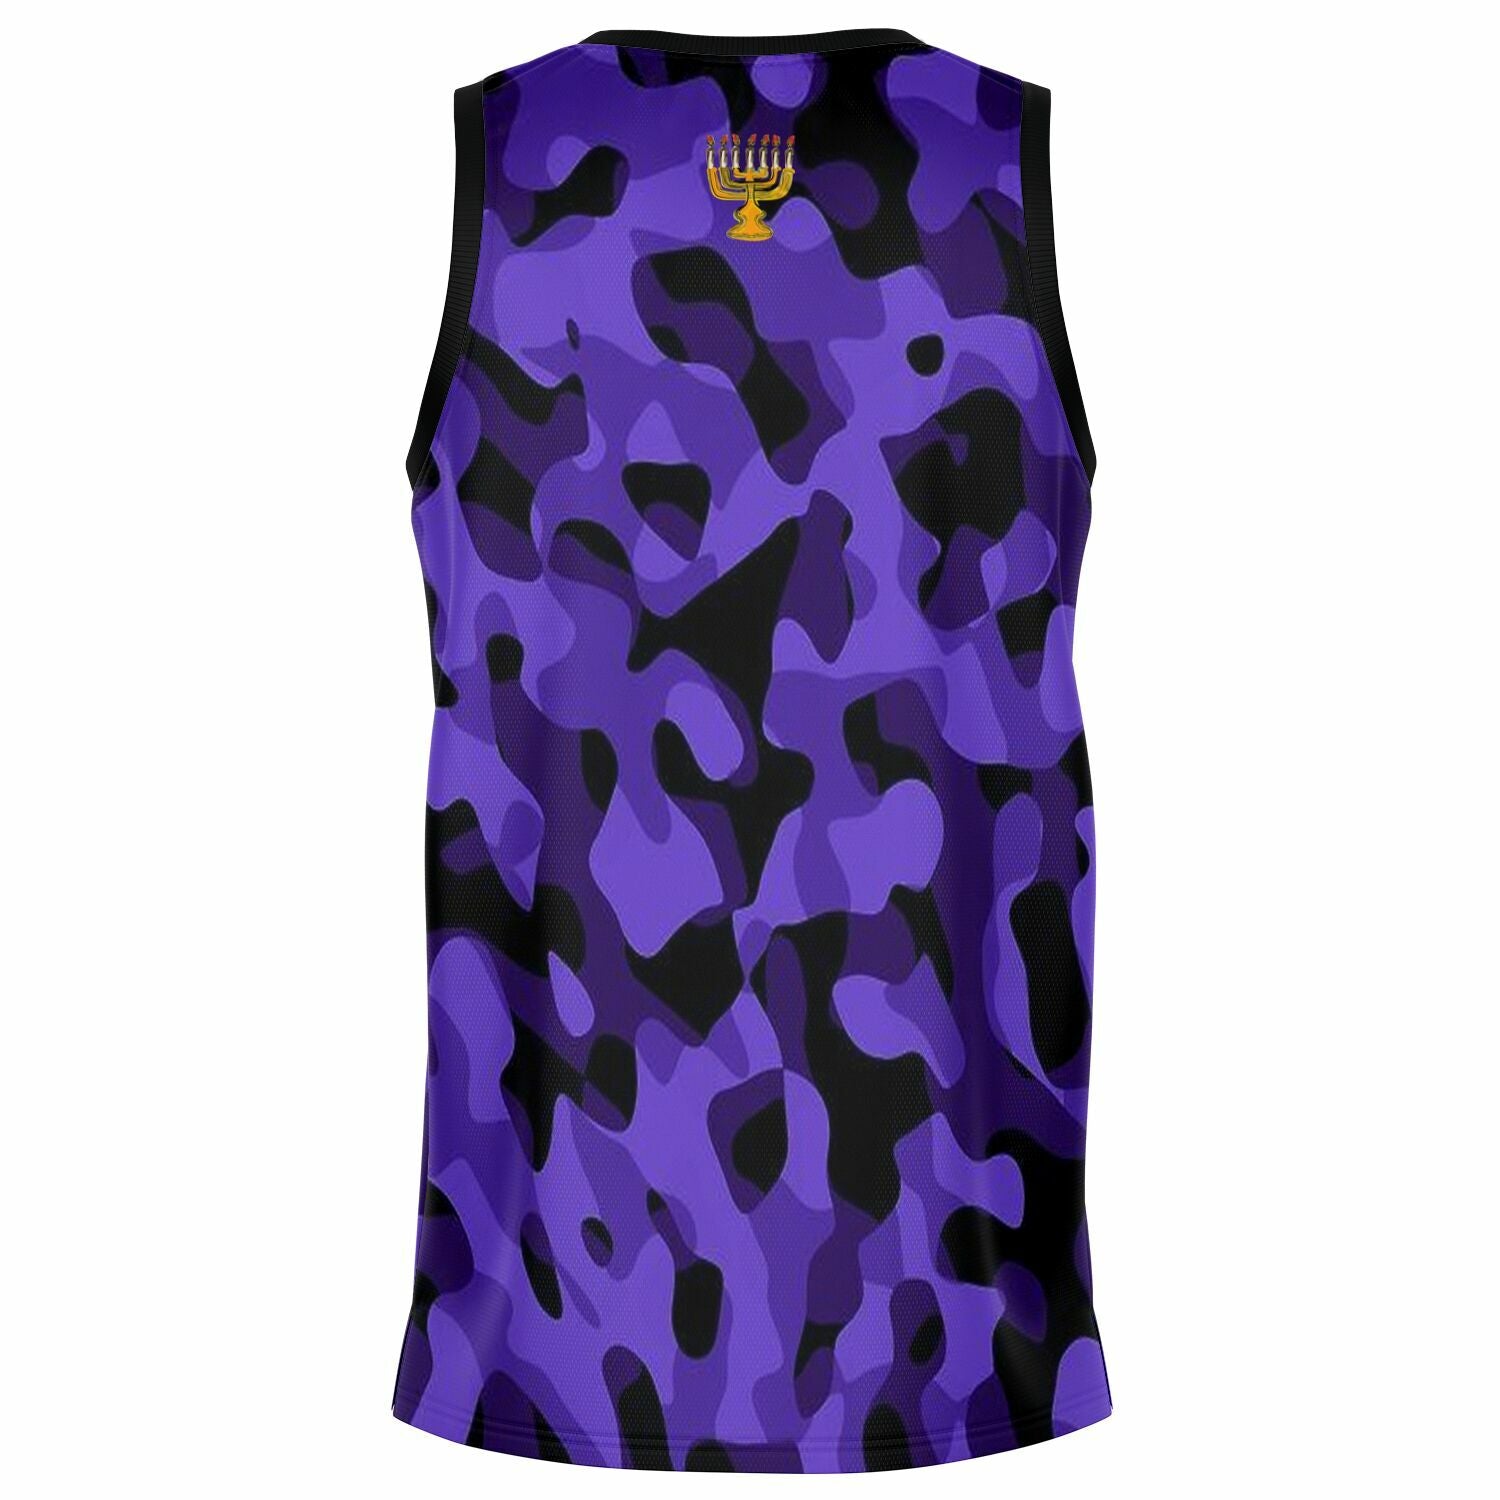 Camo Royal Purple Premium Fit Basketball Jersey